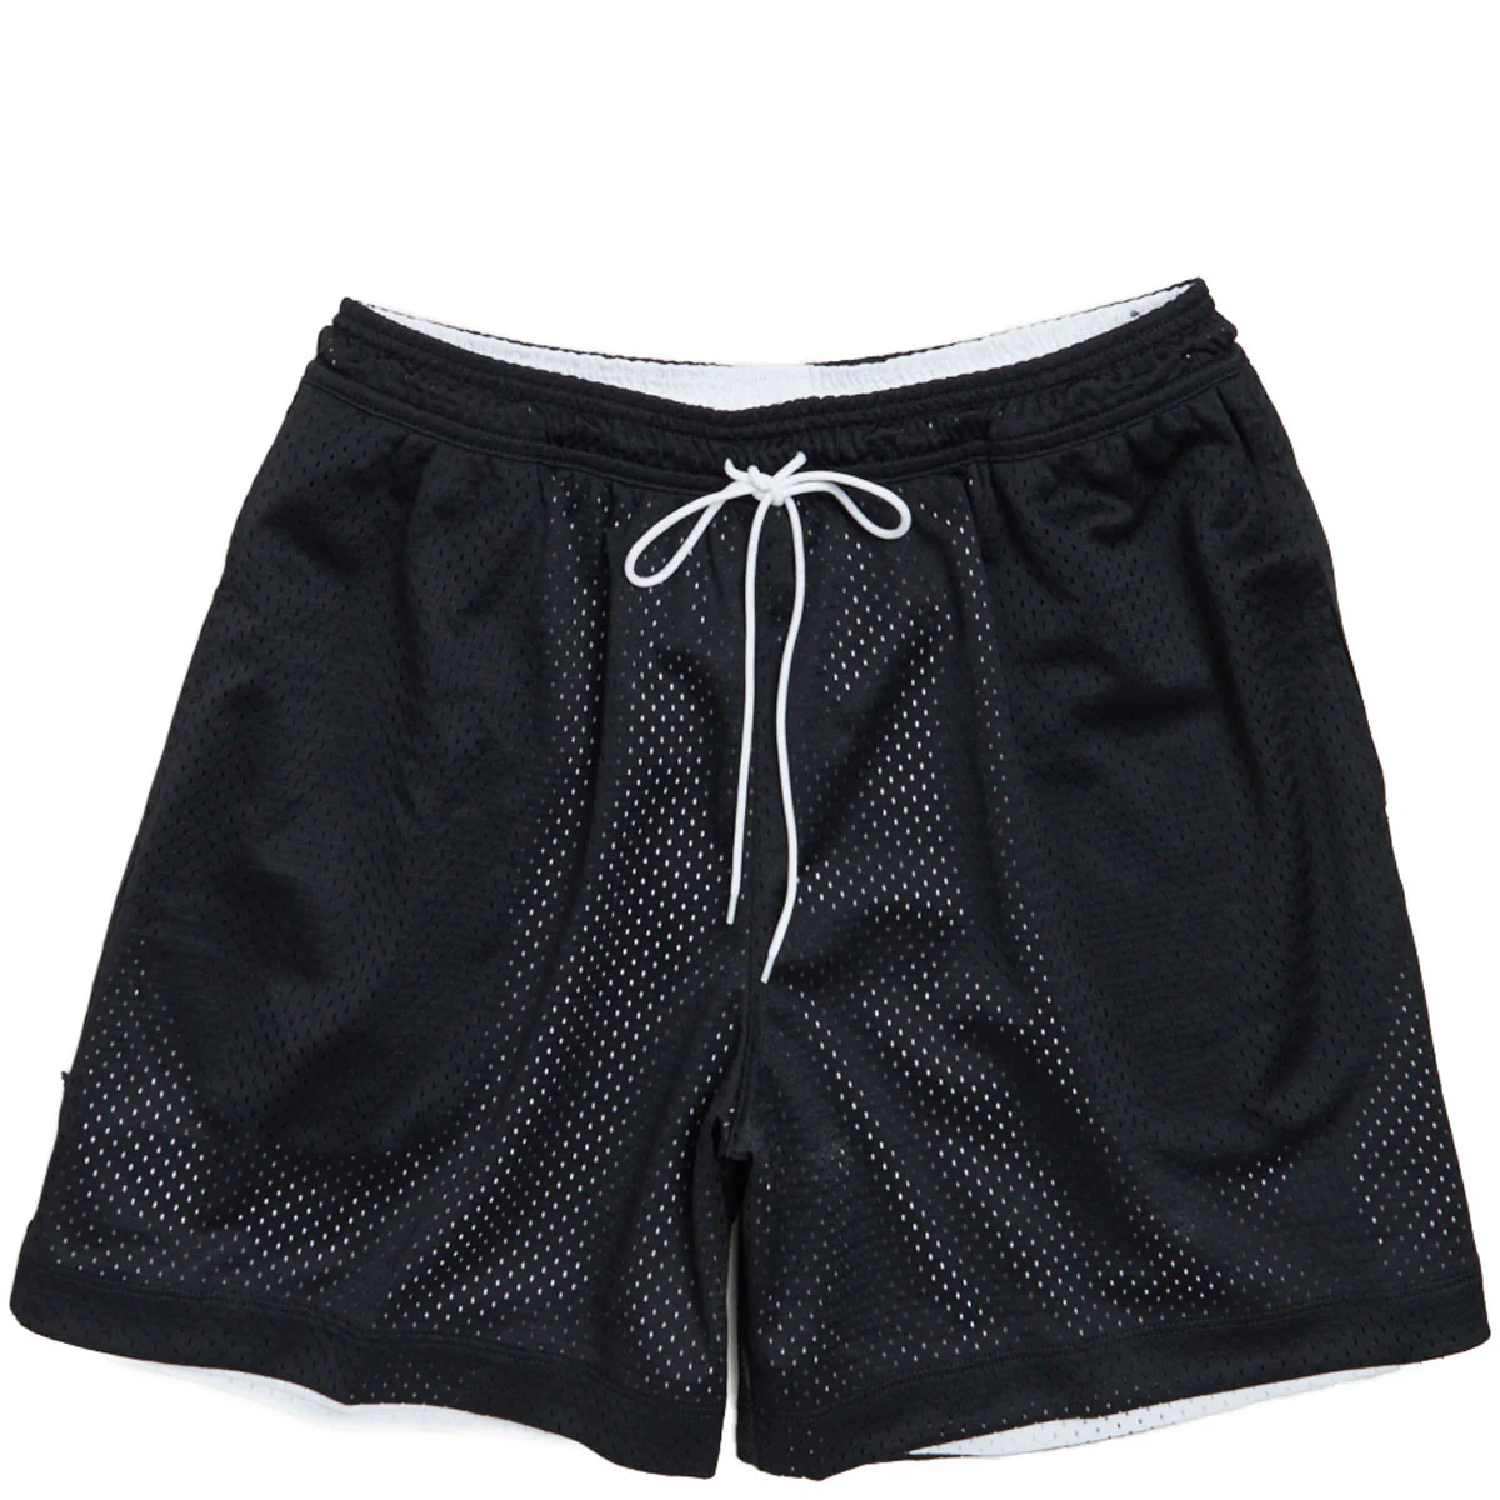 Nike SB - Bball Shorts - FN2593-010 Black and white skateboarding shorts